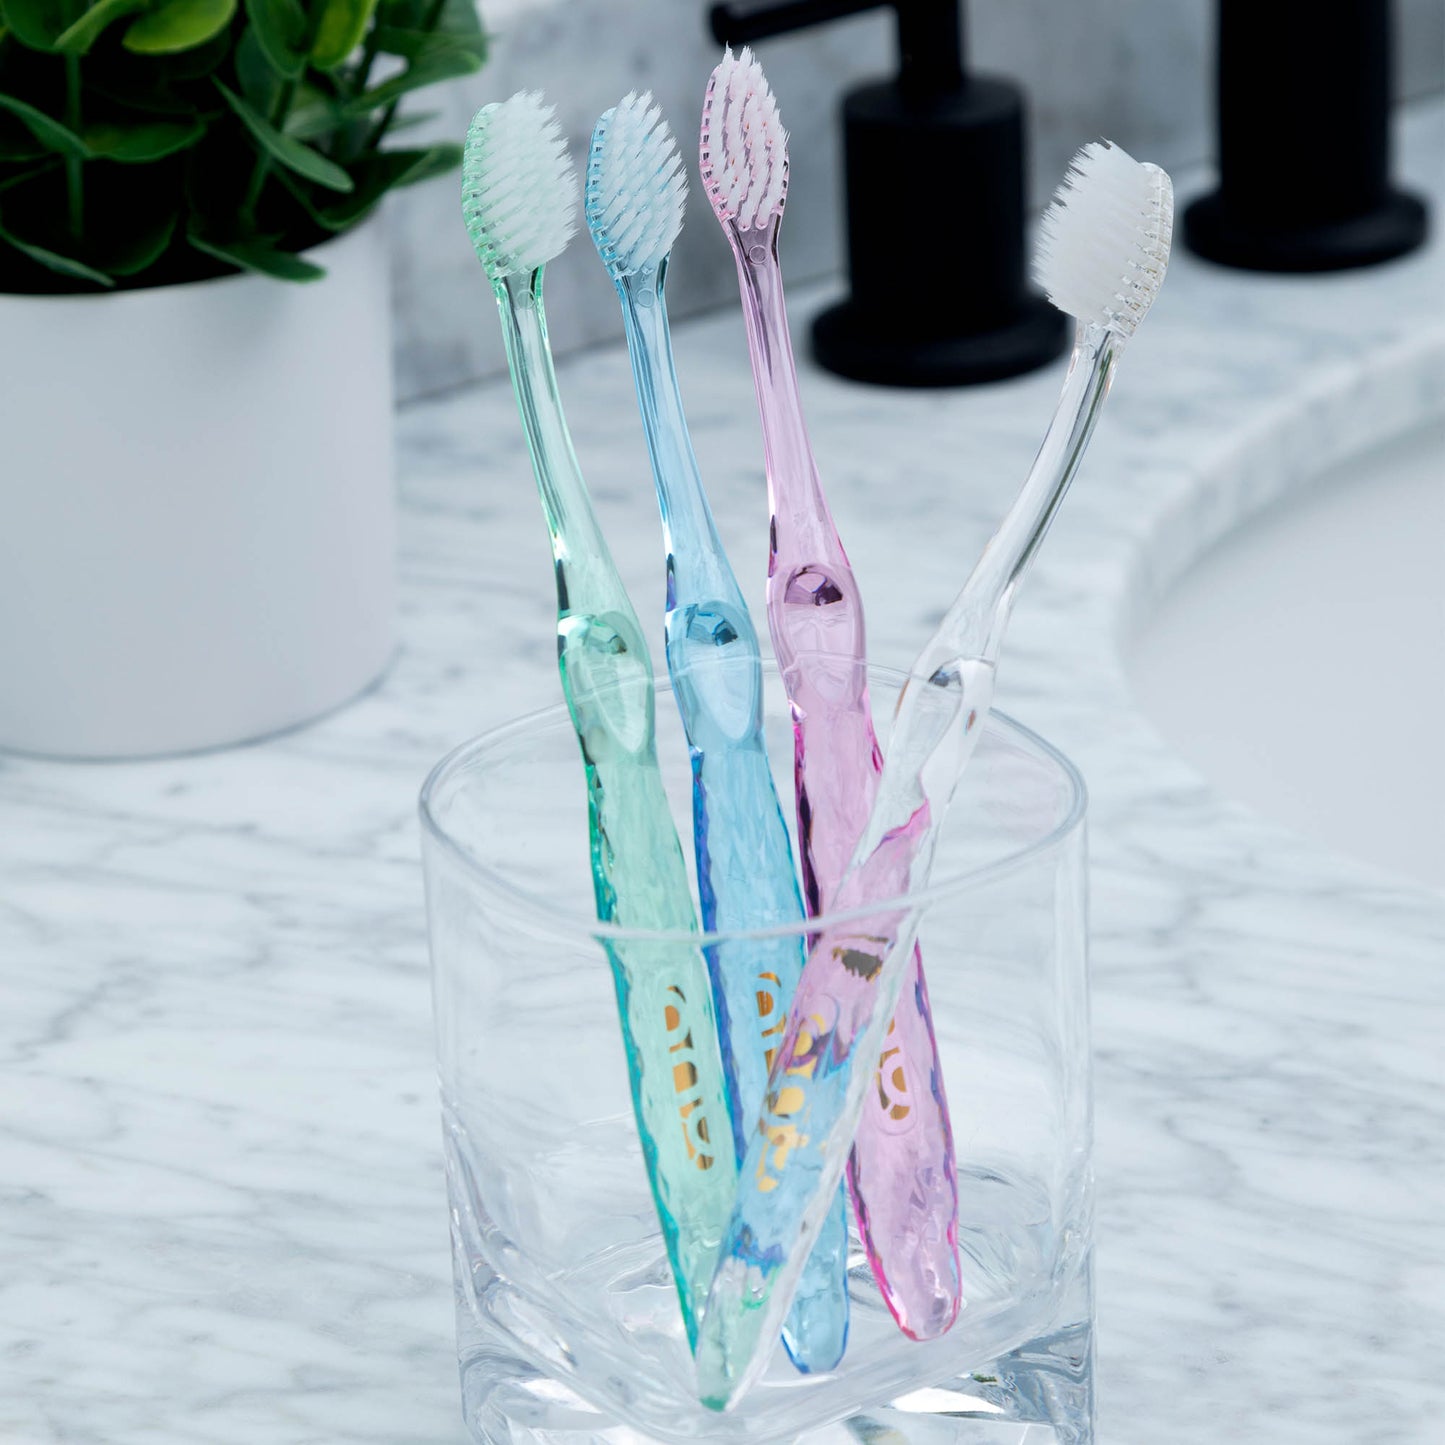 Nano-B&trade; Silver Toothbrush